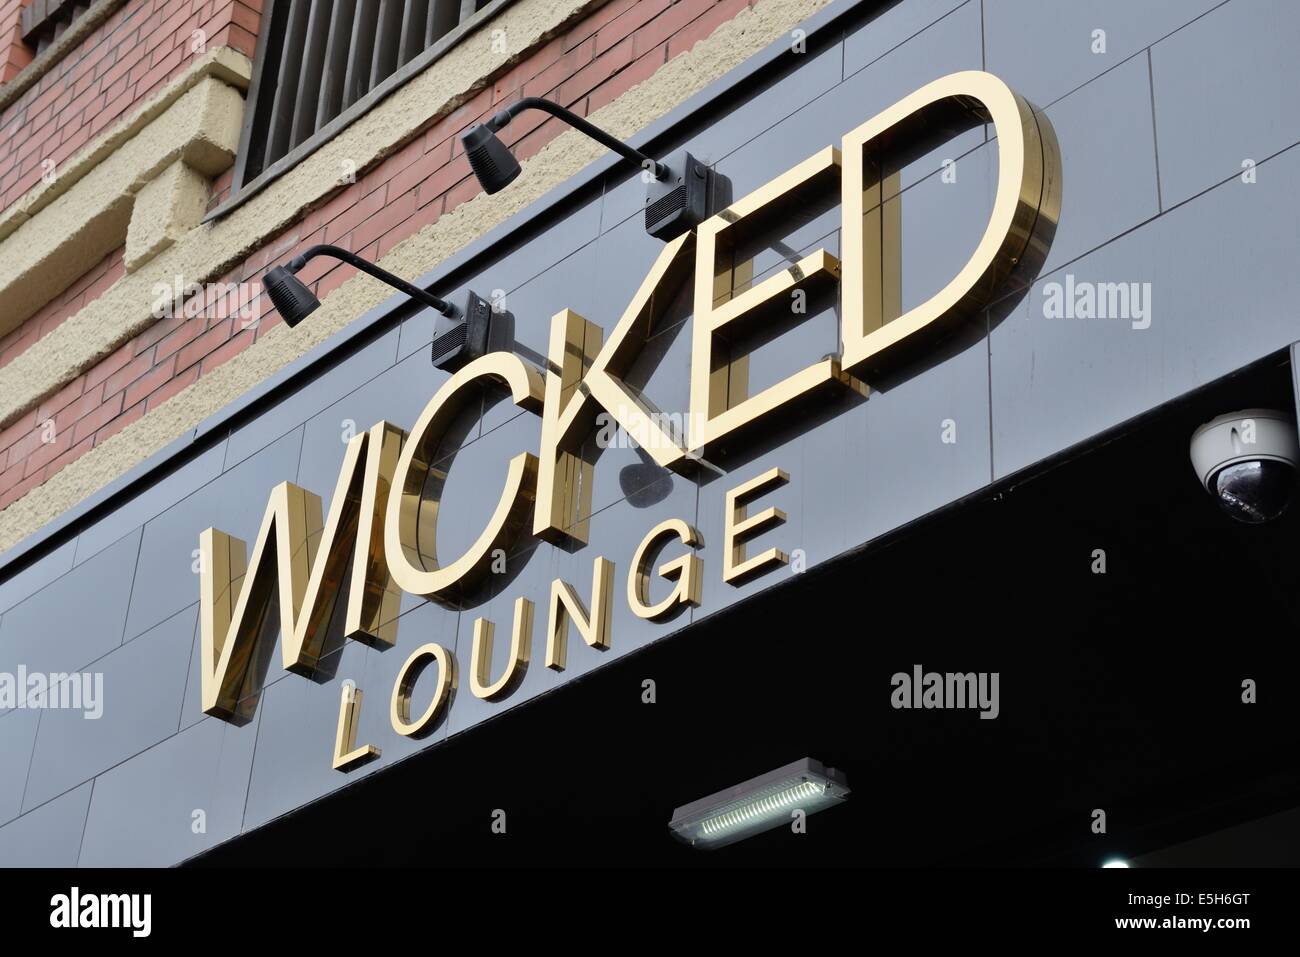 The Wicked lounge, Candleriggs, Glasgow, Scotland, UK, Europe Stock Photo